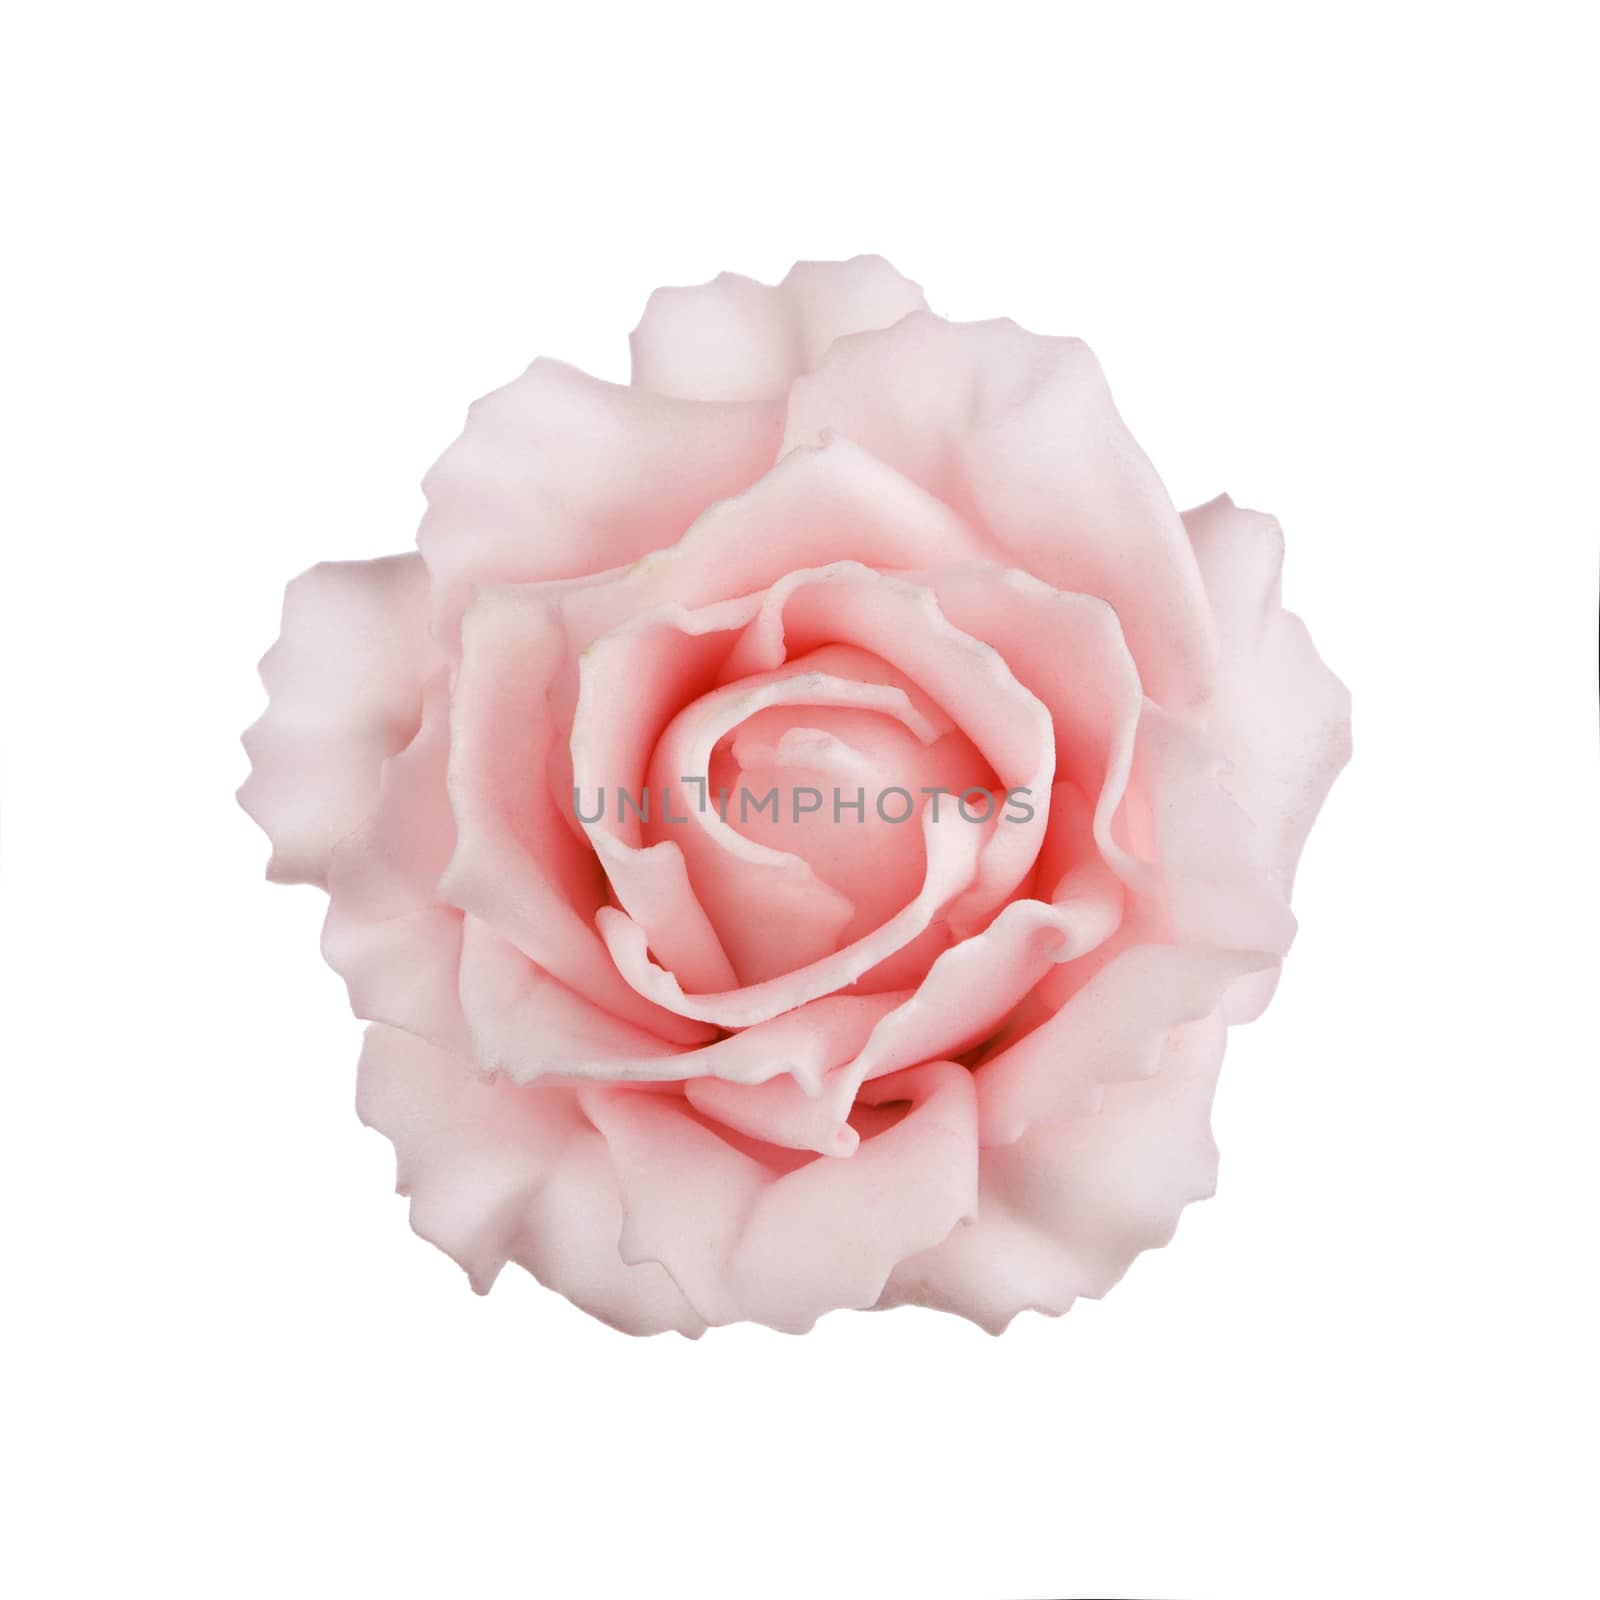 pinkr rose isolated on white by serkucher